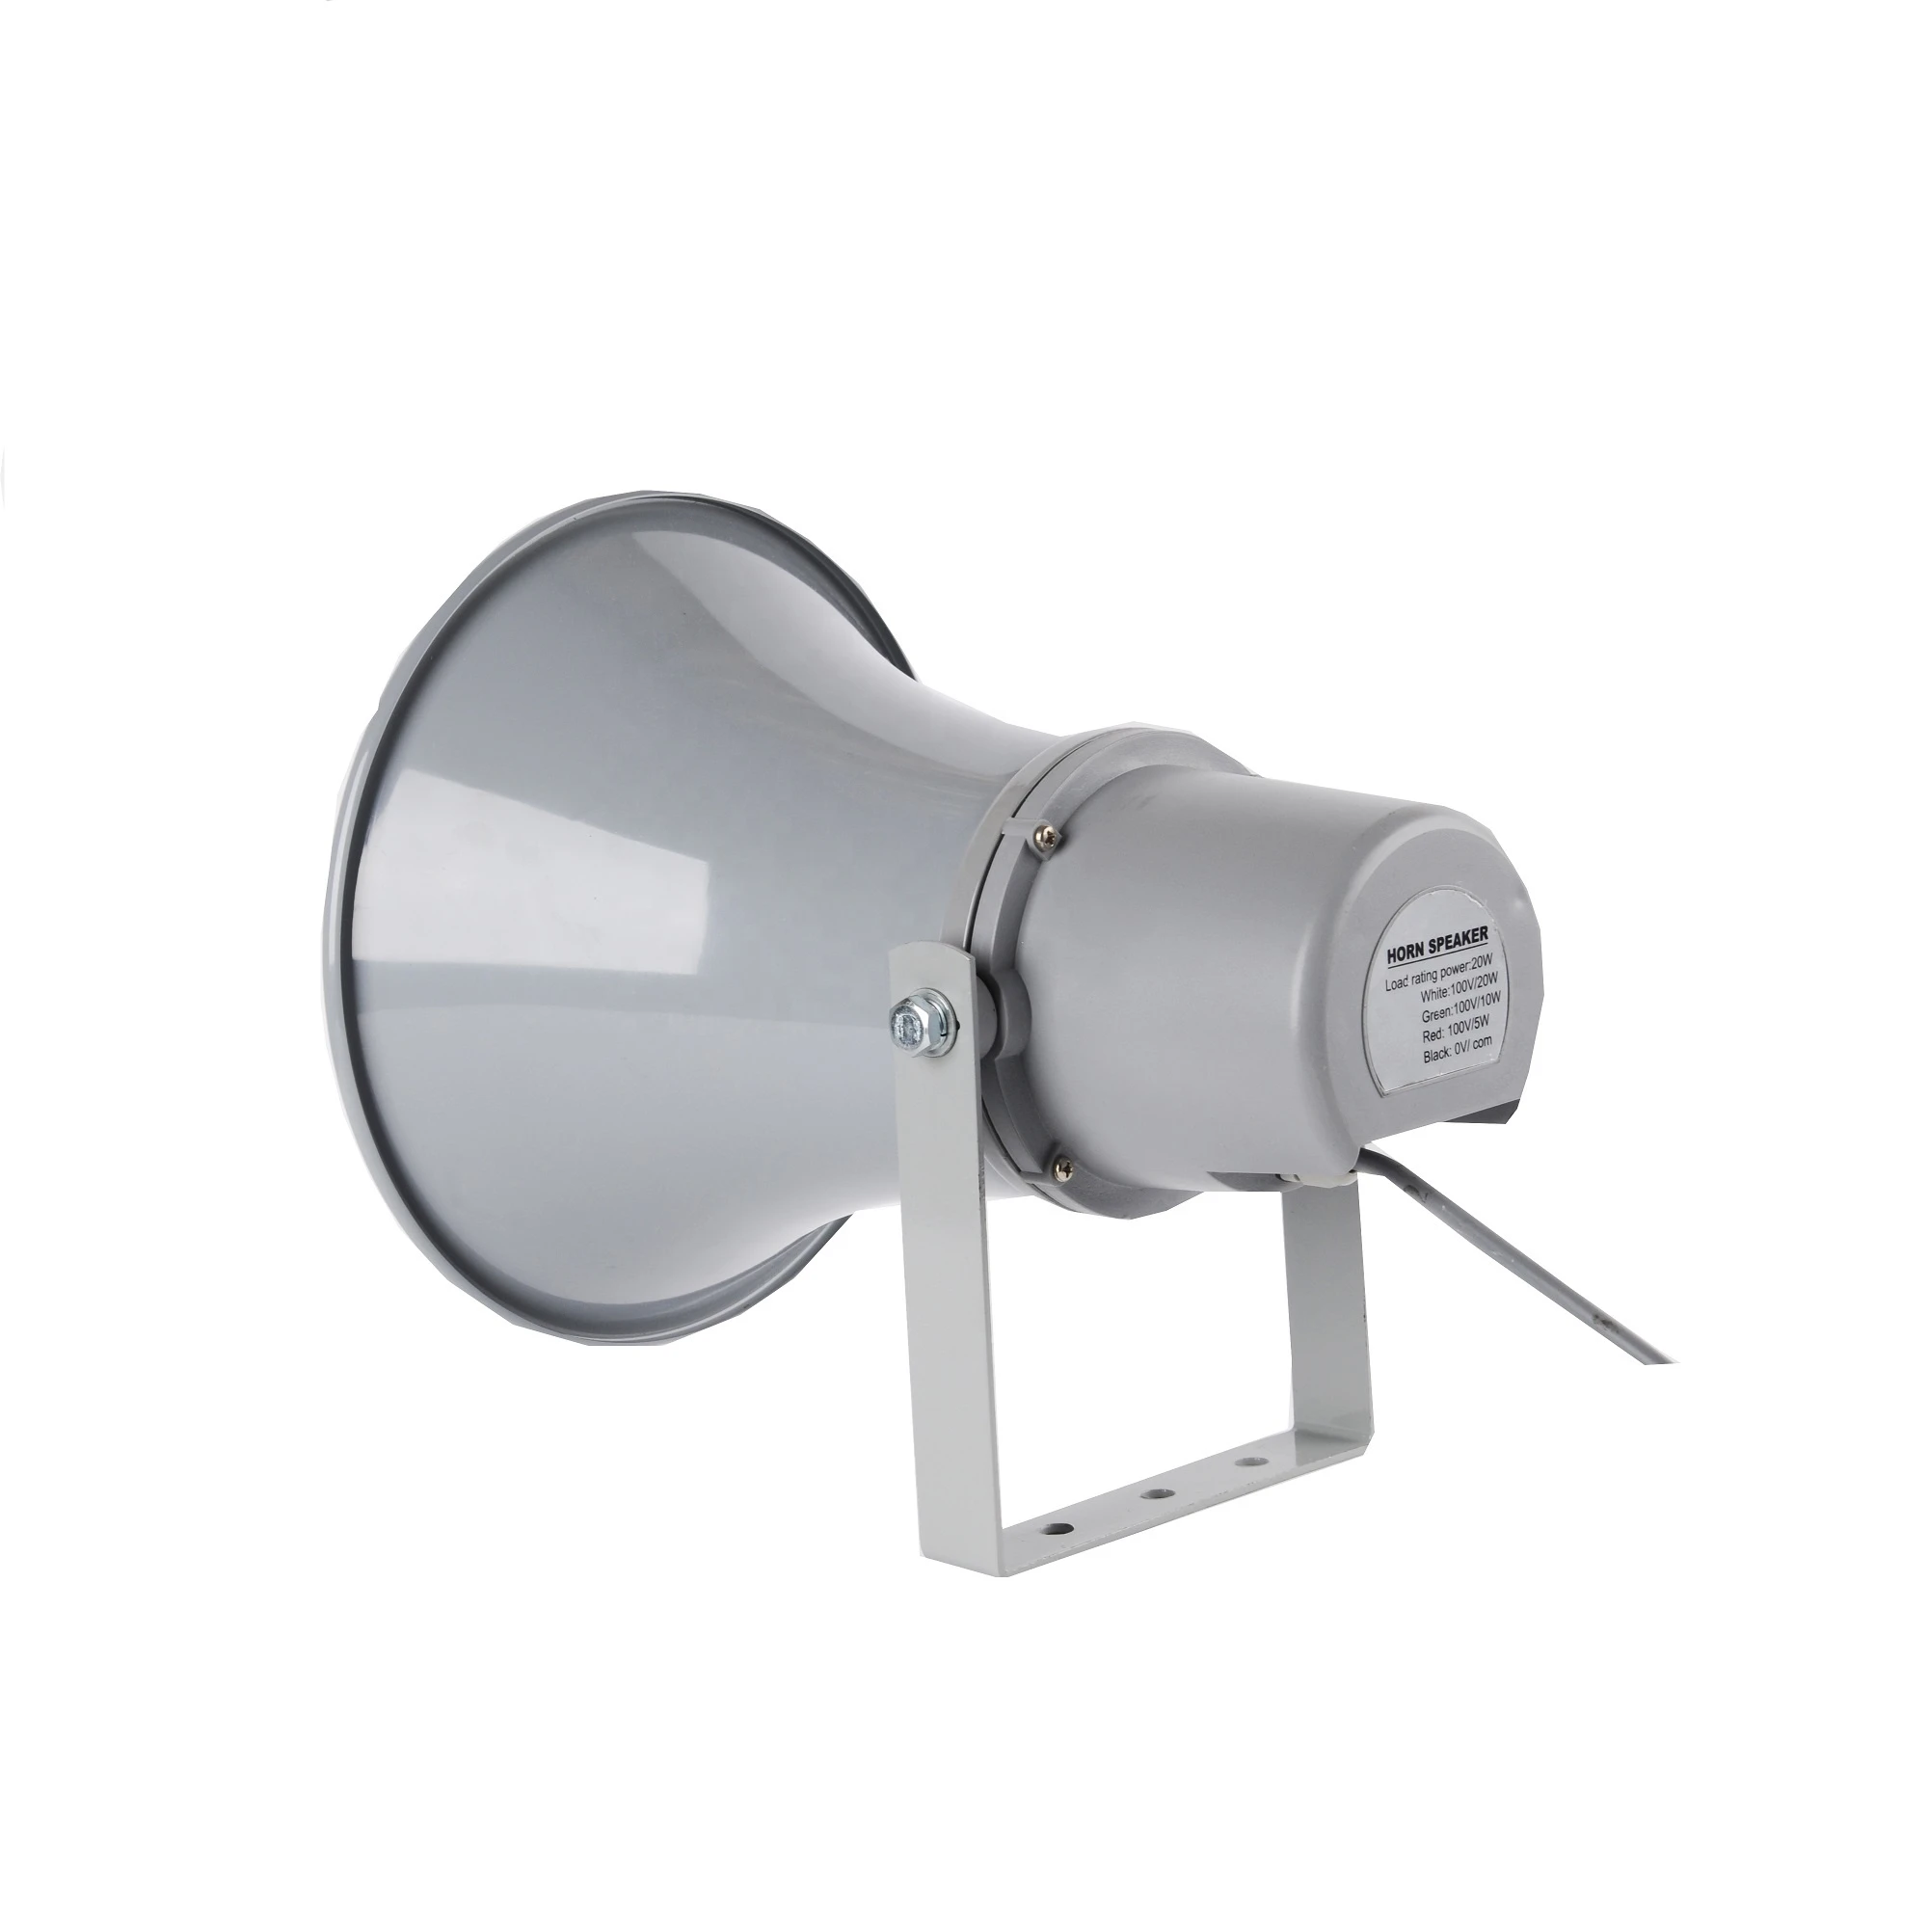 20W 100V waterproof outdoor horn speaker